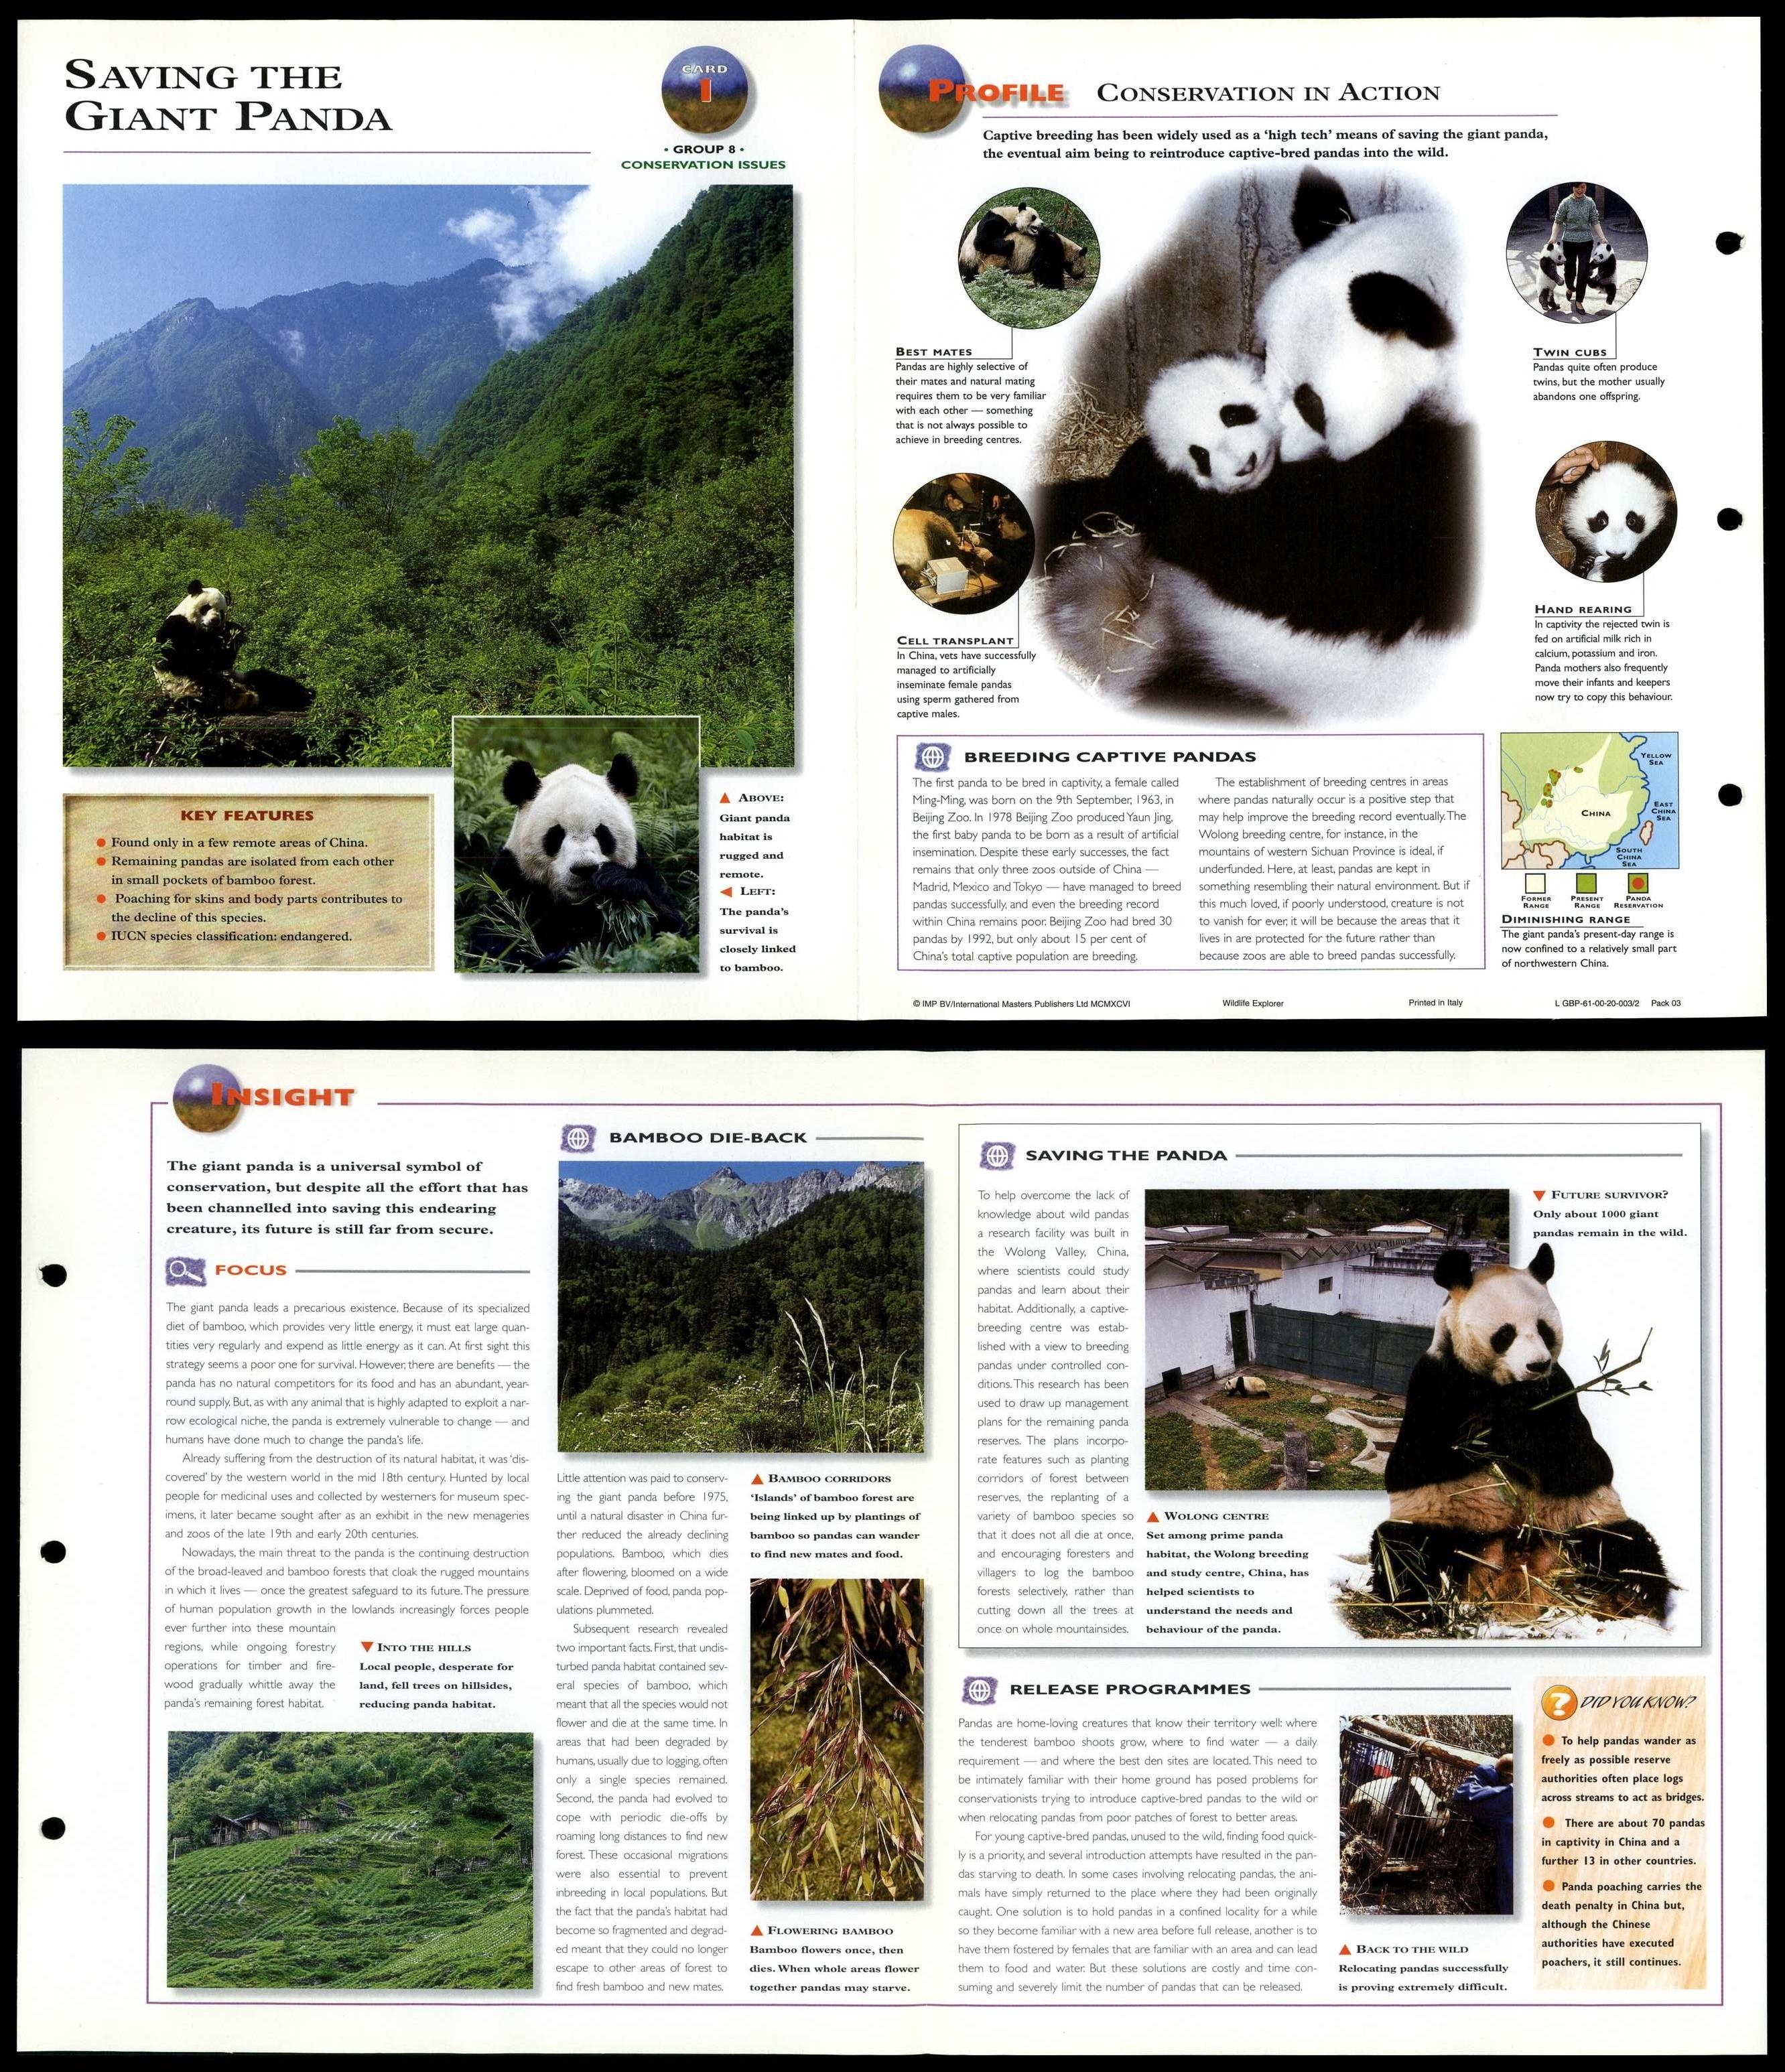 Saving The Giant Panda #1 Conservation - Wildlife Explorer Fold-Out Card